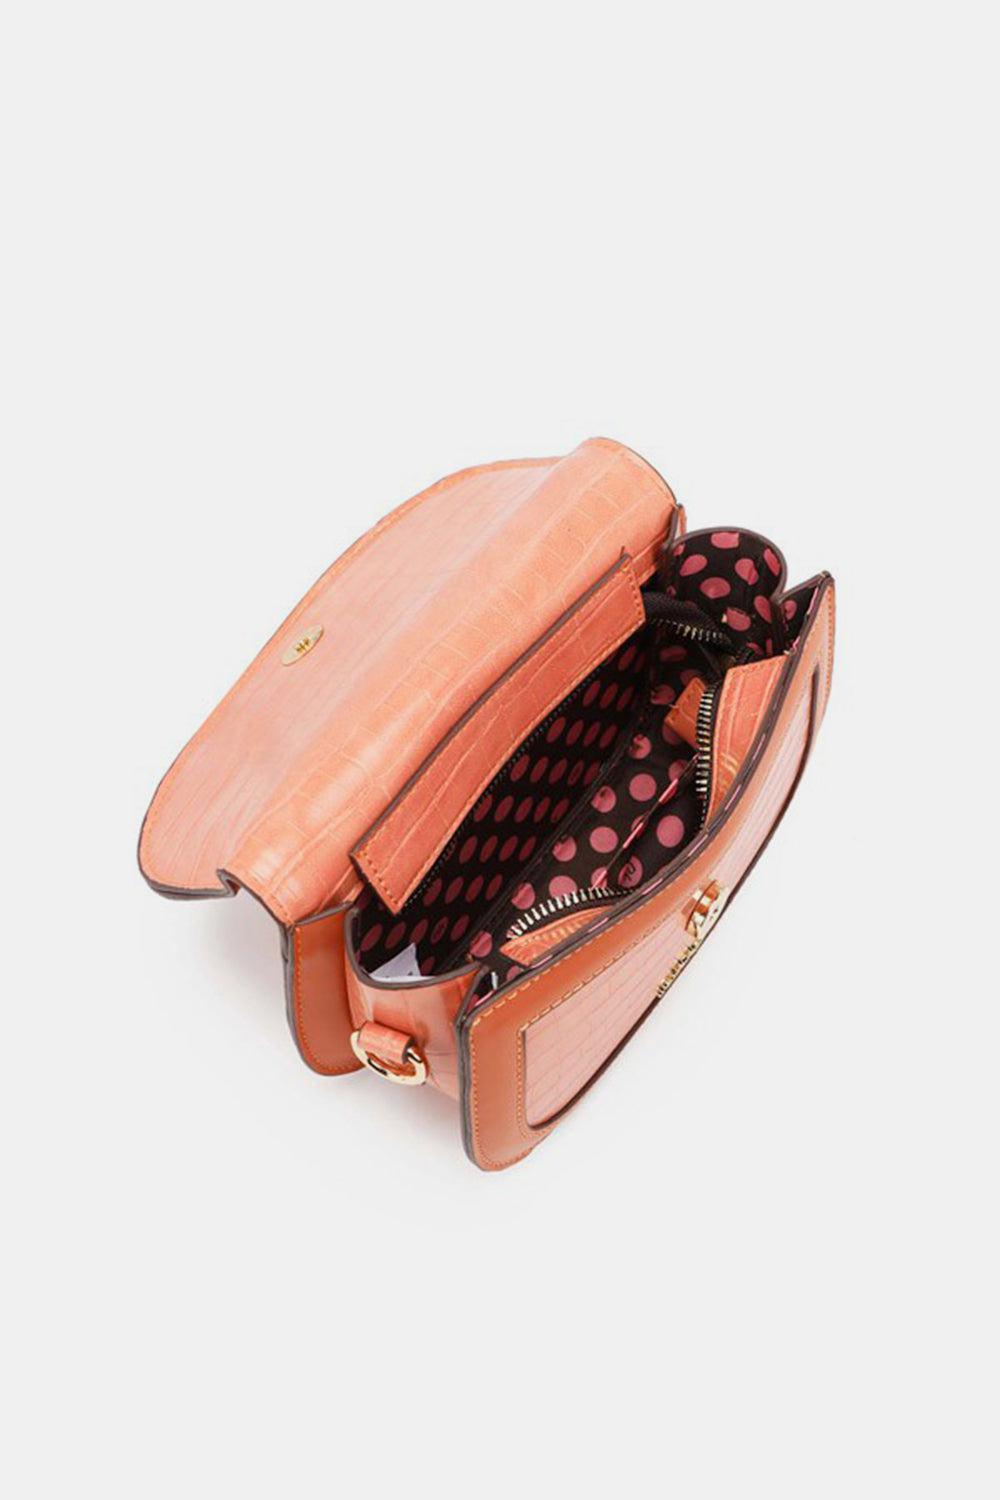 a handbag with a polka dot print inside